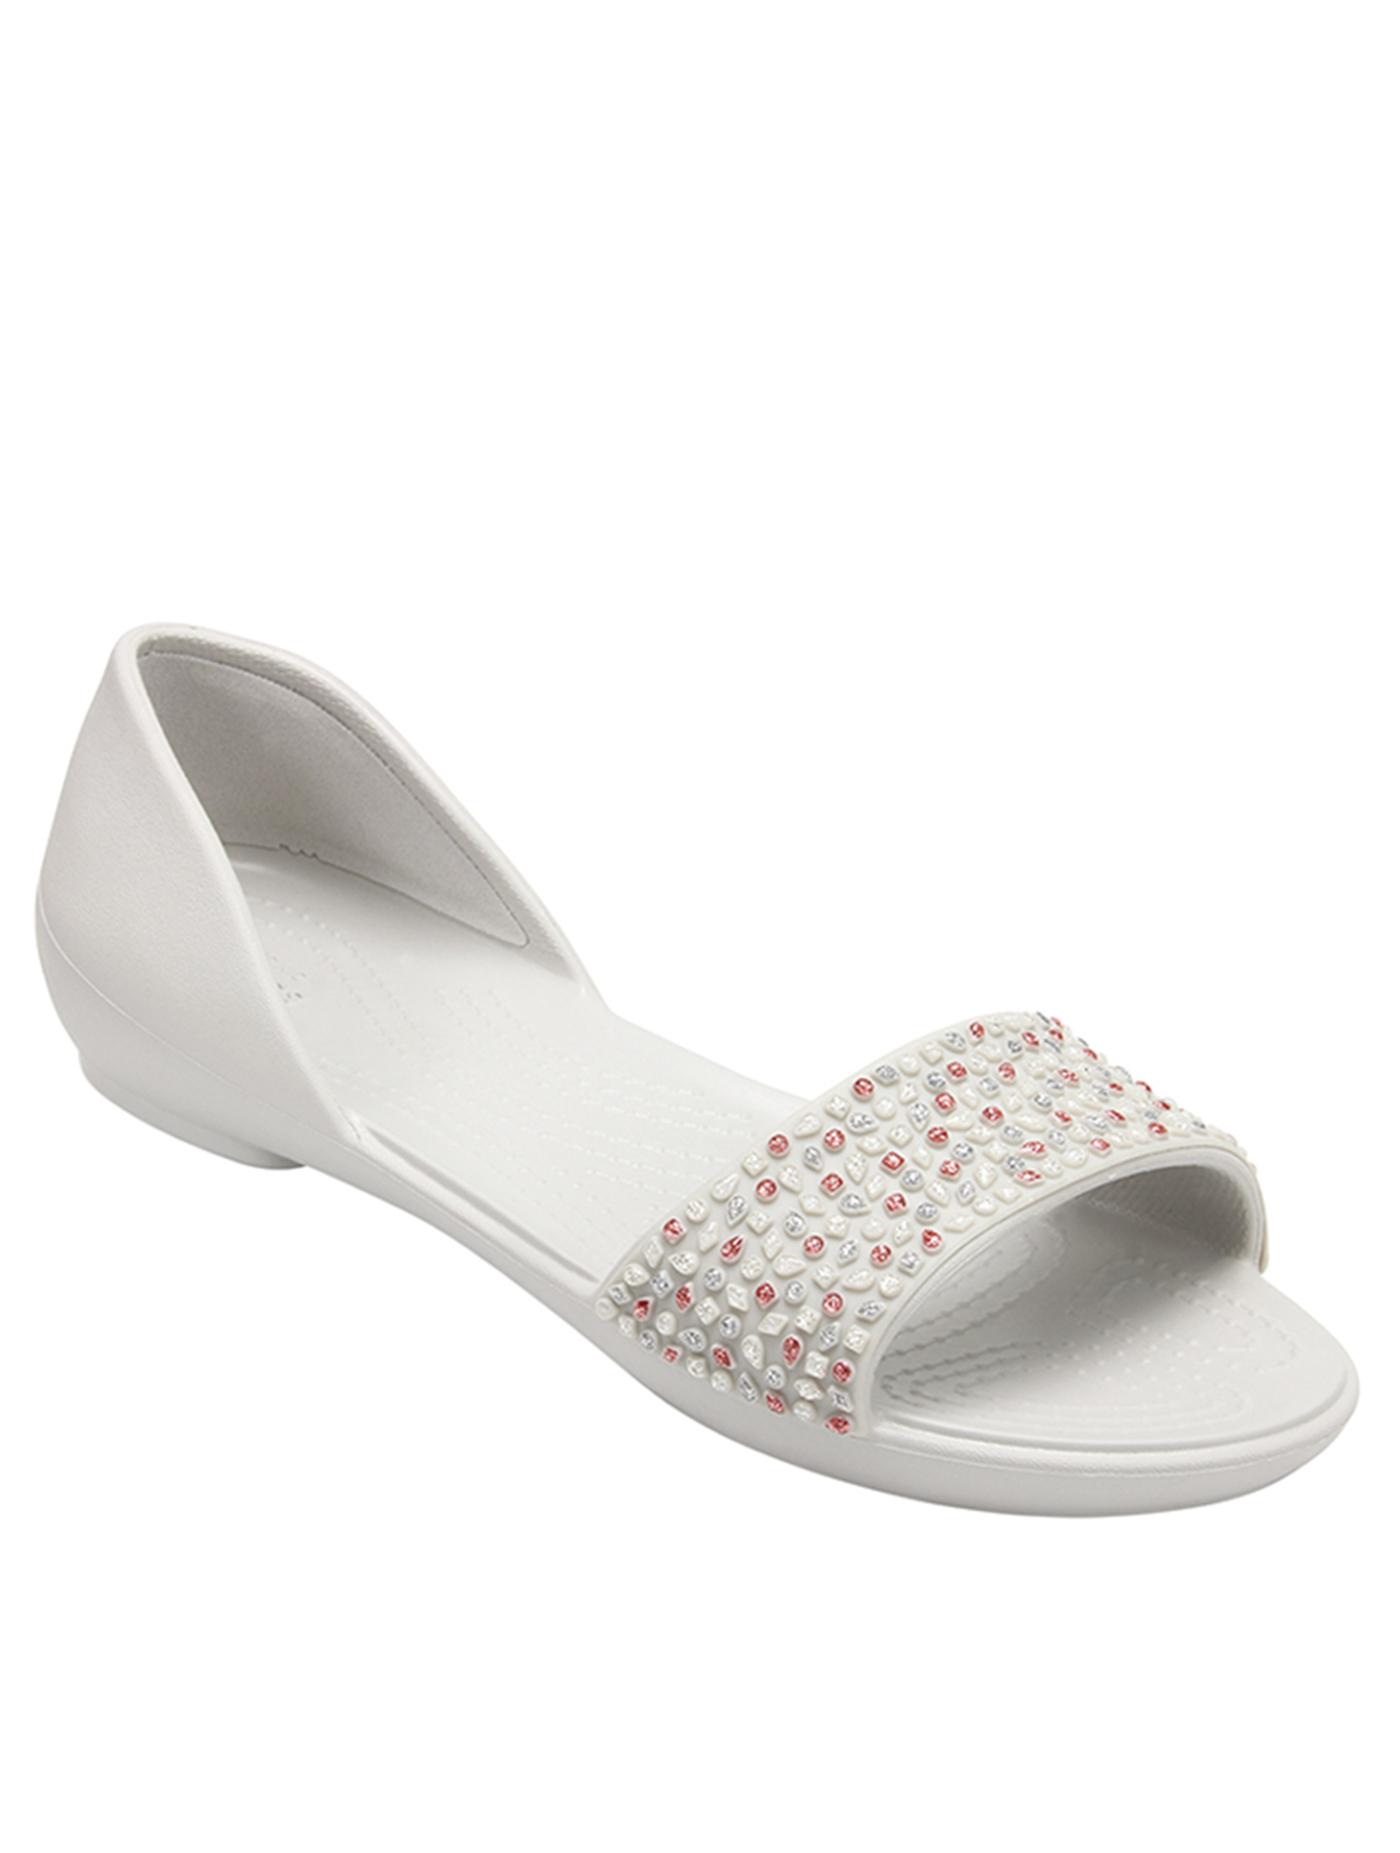 CROCS รองเท้าลำลองสำหรับผู้หญิง รุ่น Lina Embellished Dorsay ไซส์ W9 สี Pearl White-Rose Gold